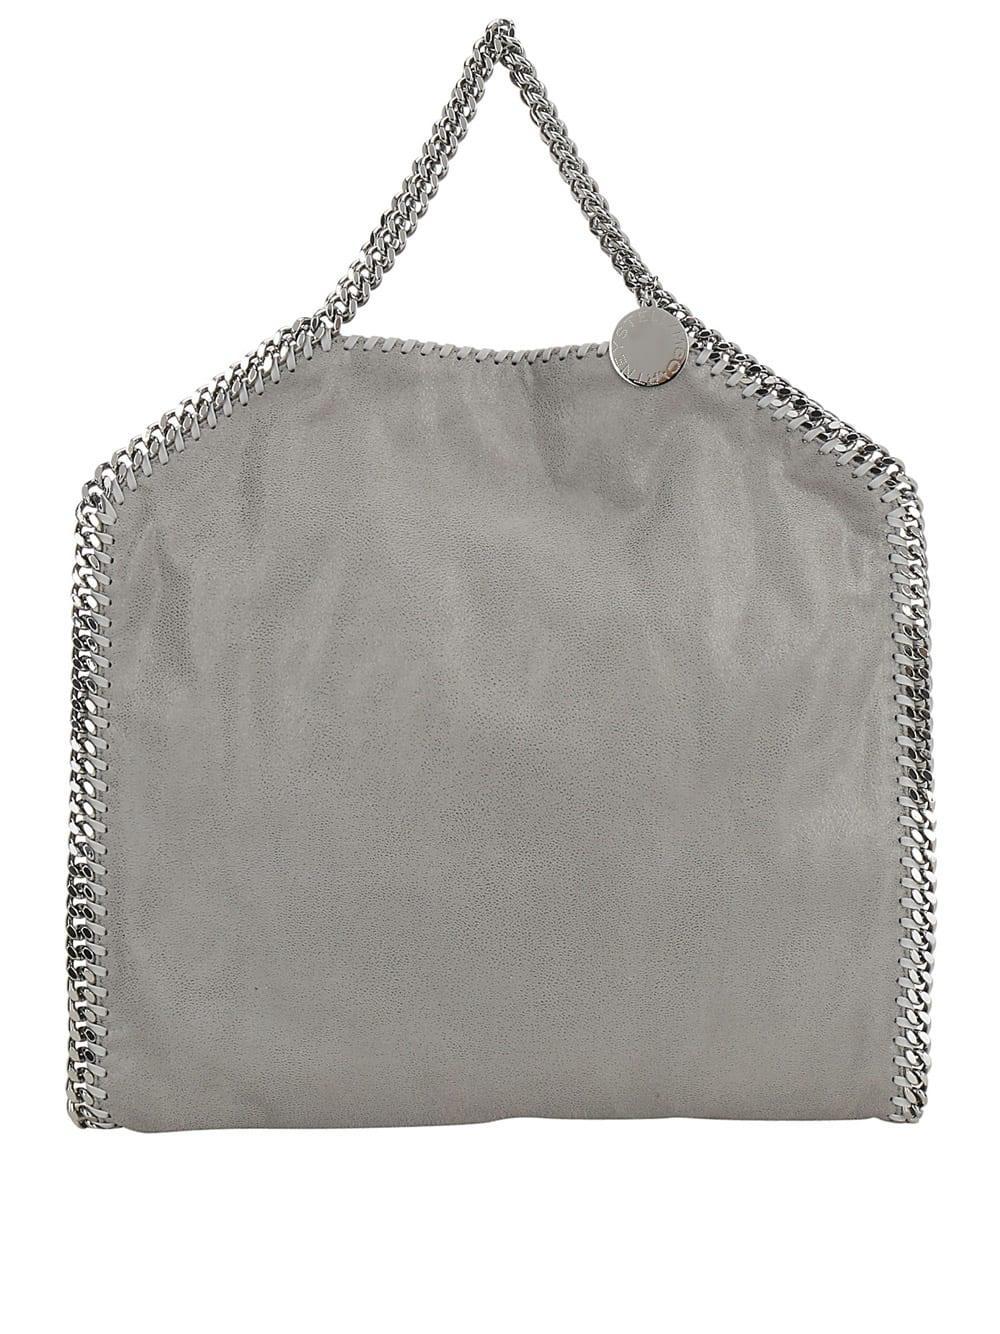 Stella McCartney Falabella Fold Over Tote Shoulder Bag in Gray | Lyst